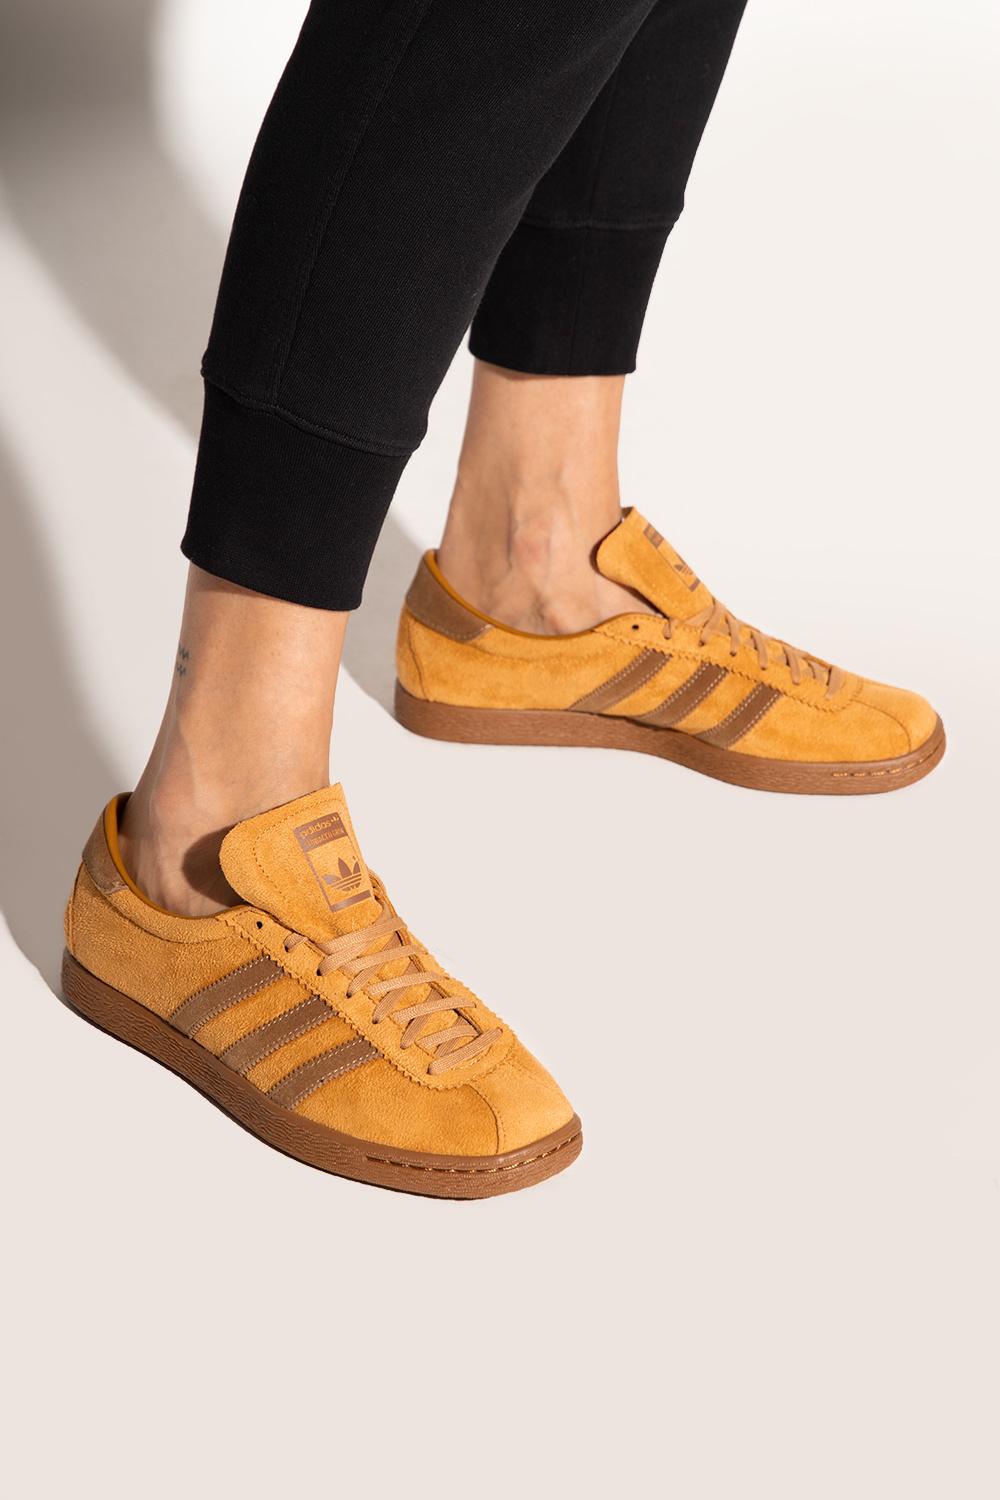 adidas Originals 'tobacco Gruen' Sneakers in Orange for Men | Lyst